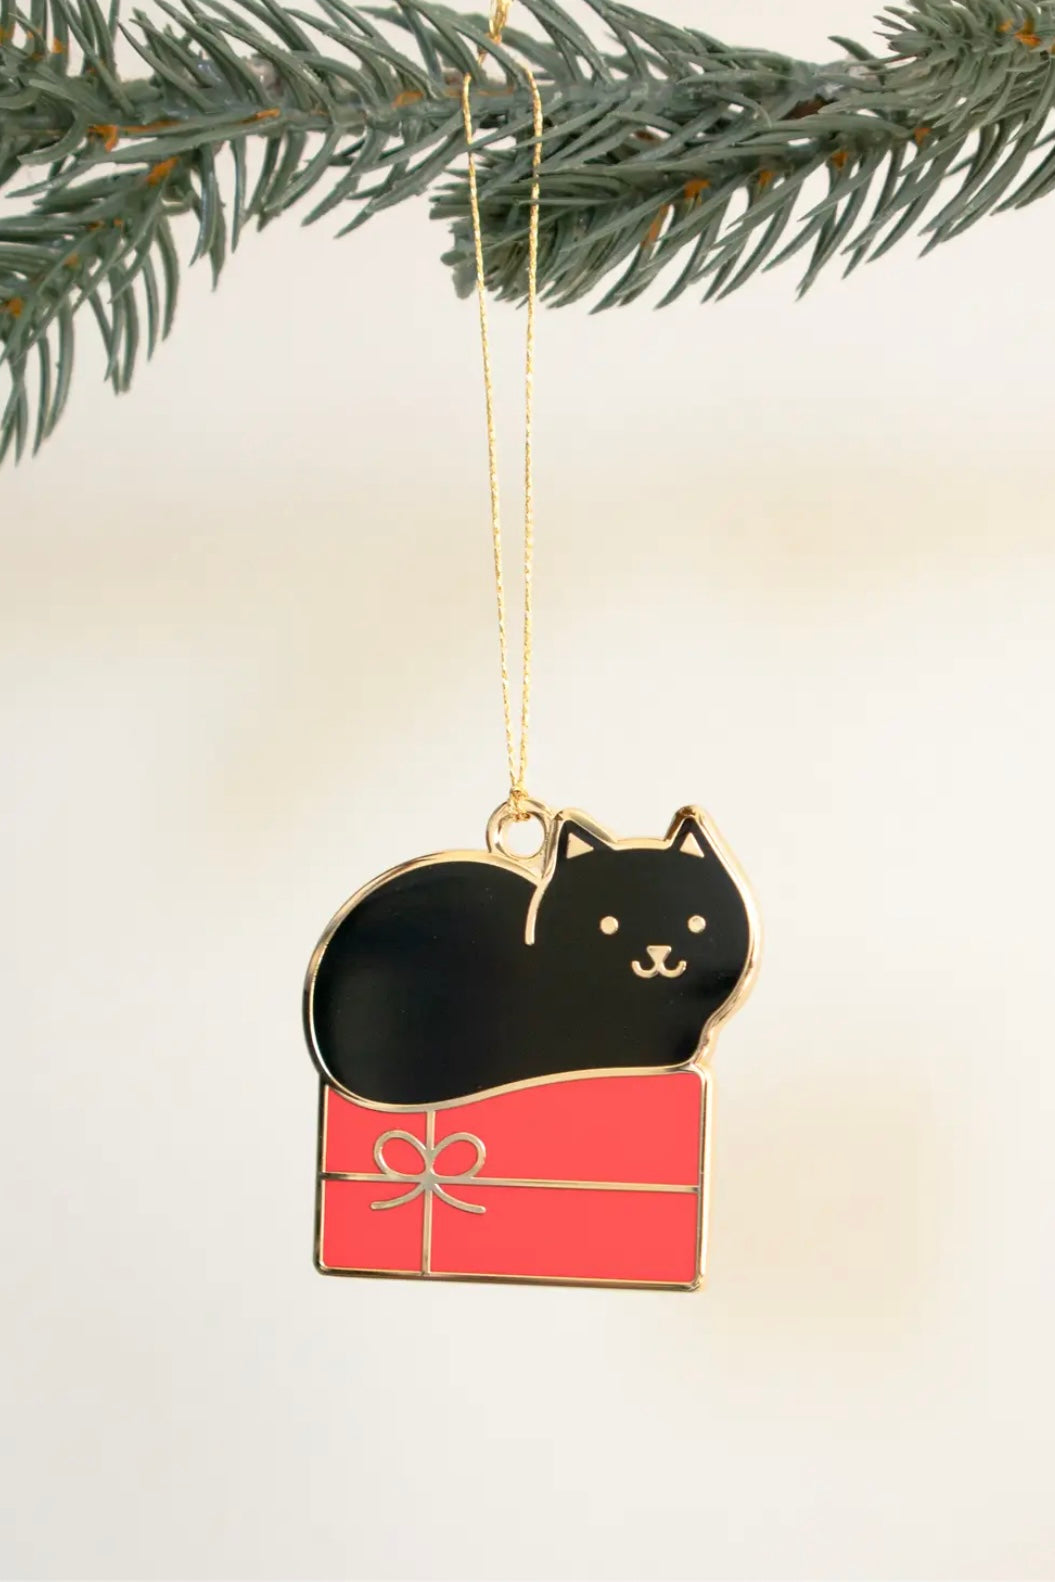 Black Cat Gift Ornament